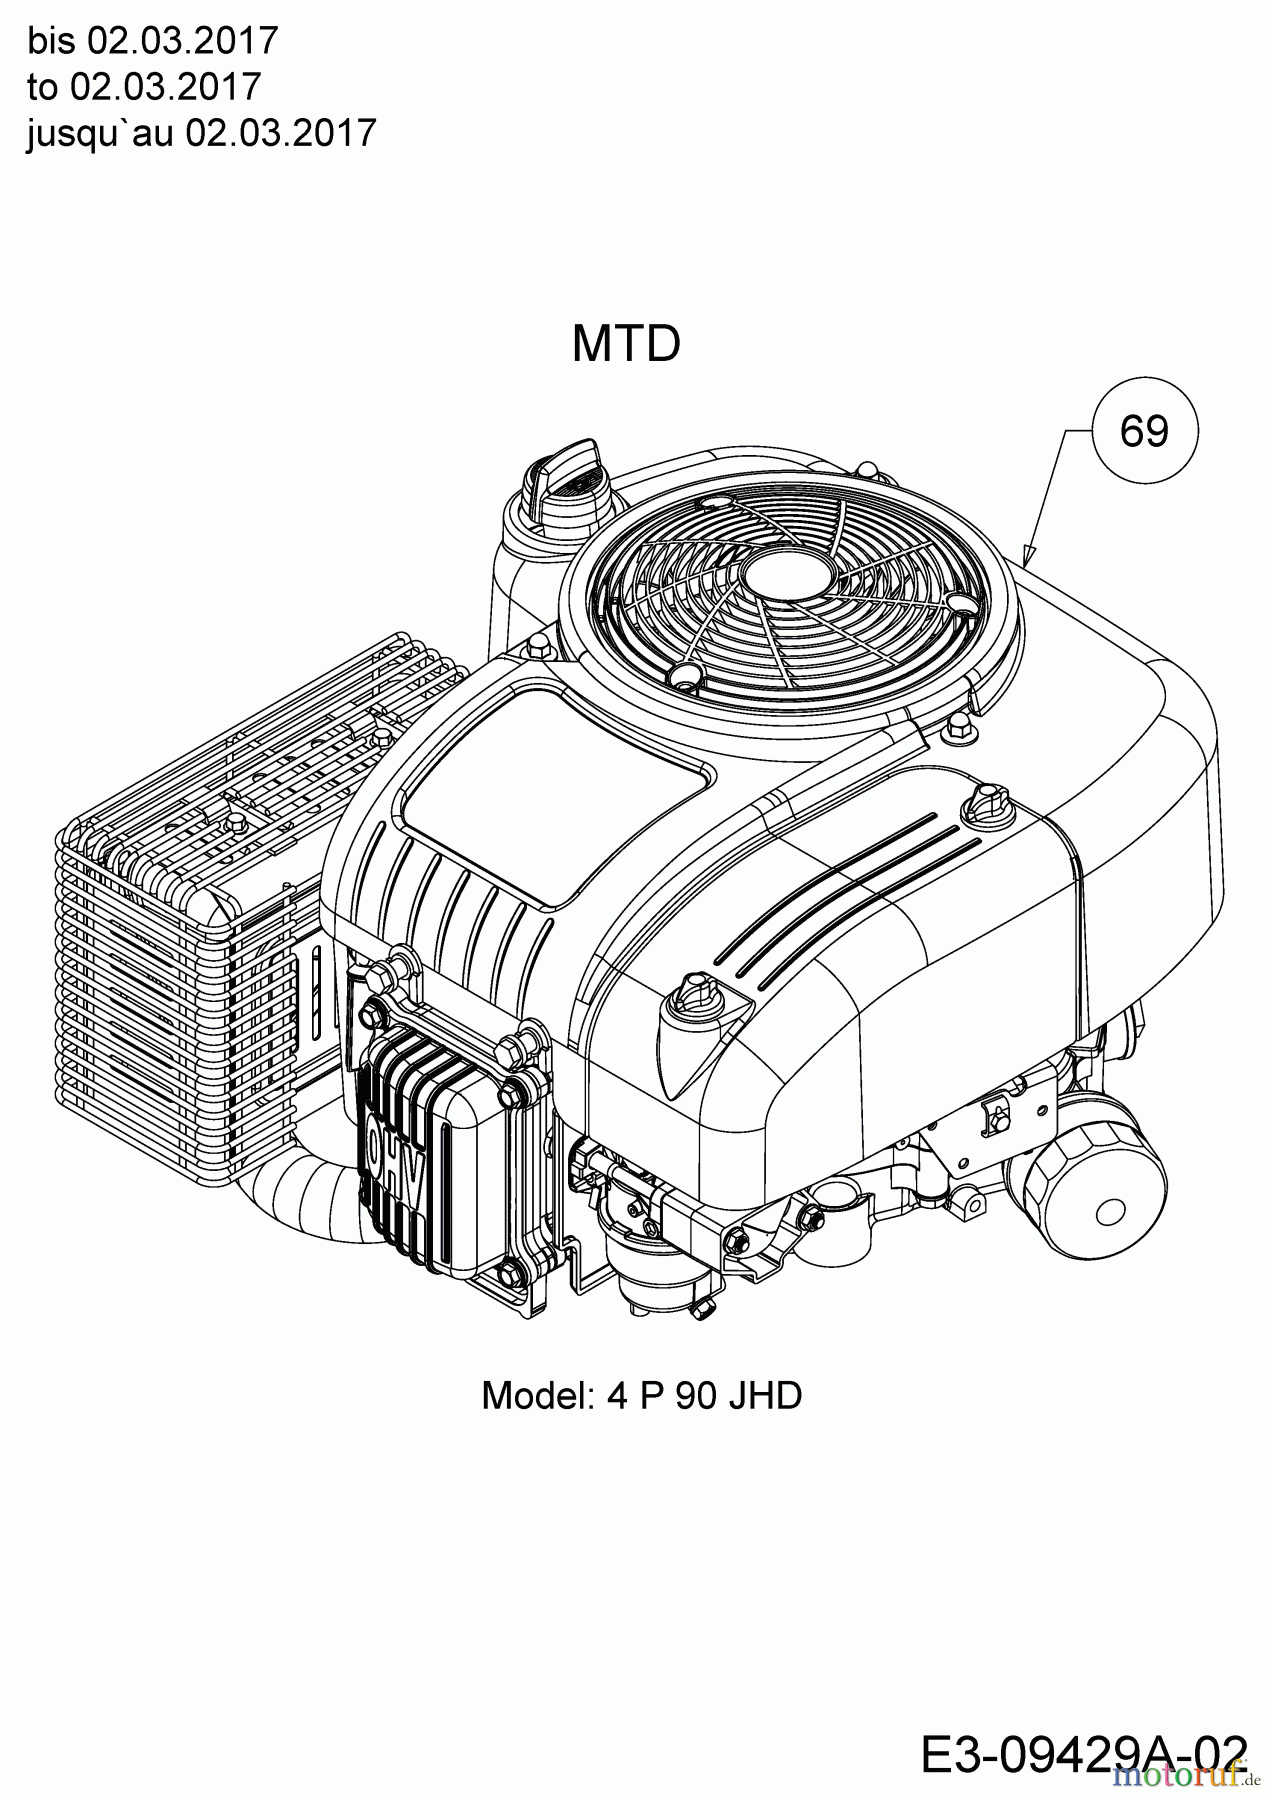  MTD Motormäher mit Antrieb WCM 84 E 12AE76SM678  (2017) Motor MTD bis 02.03.2017